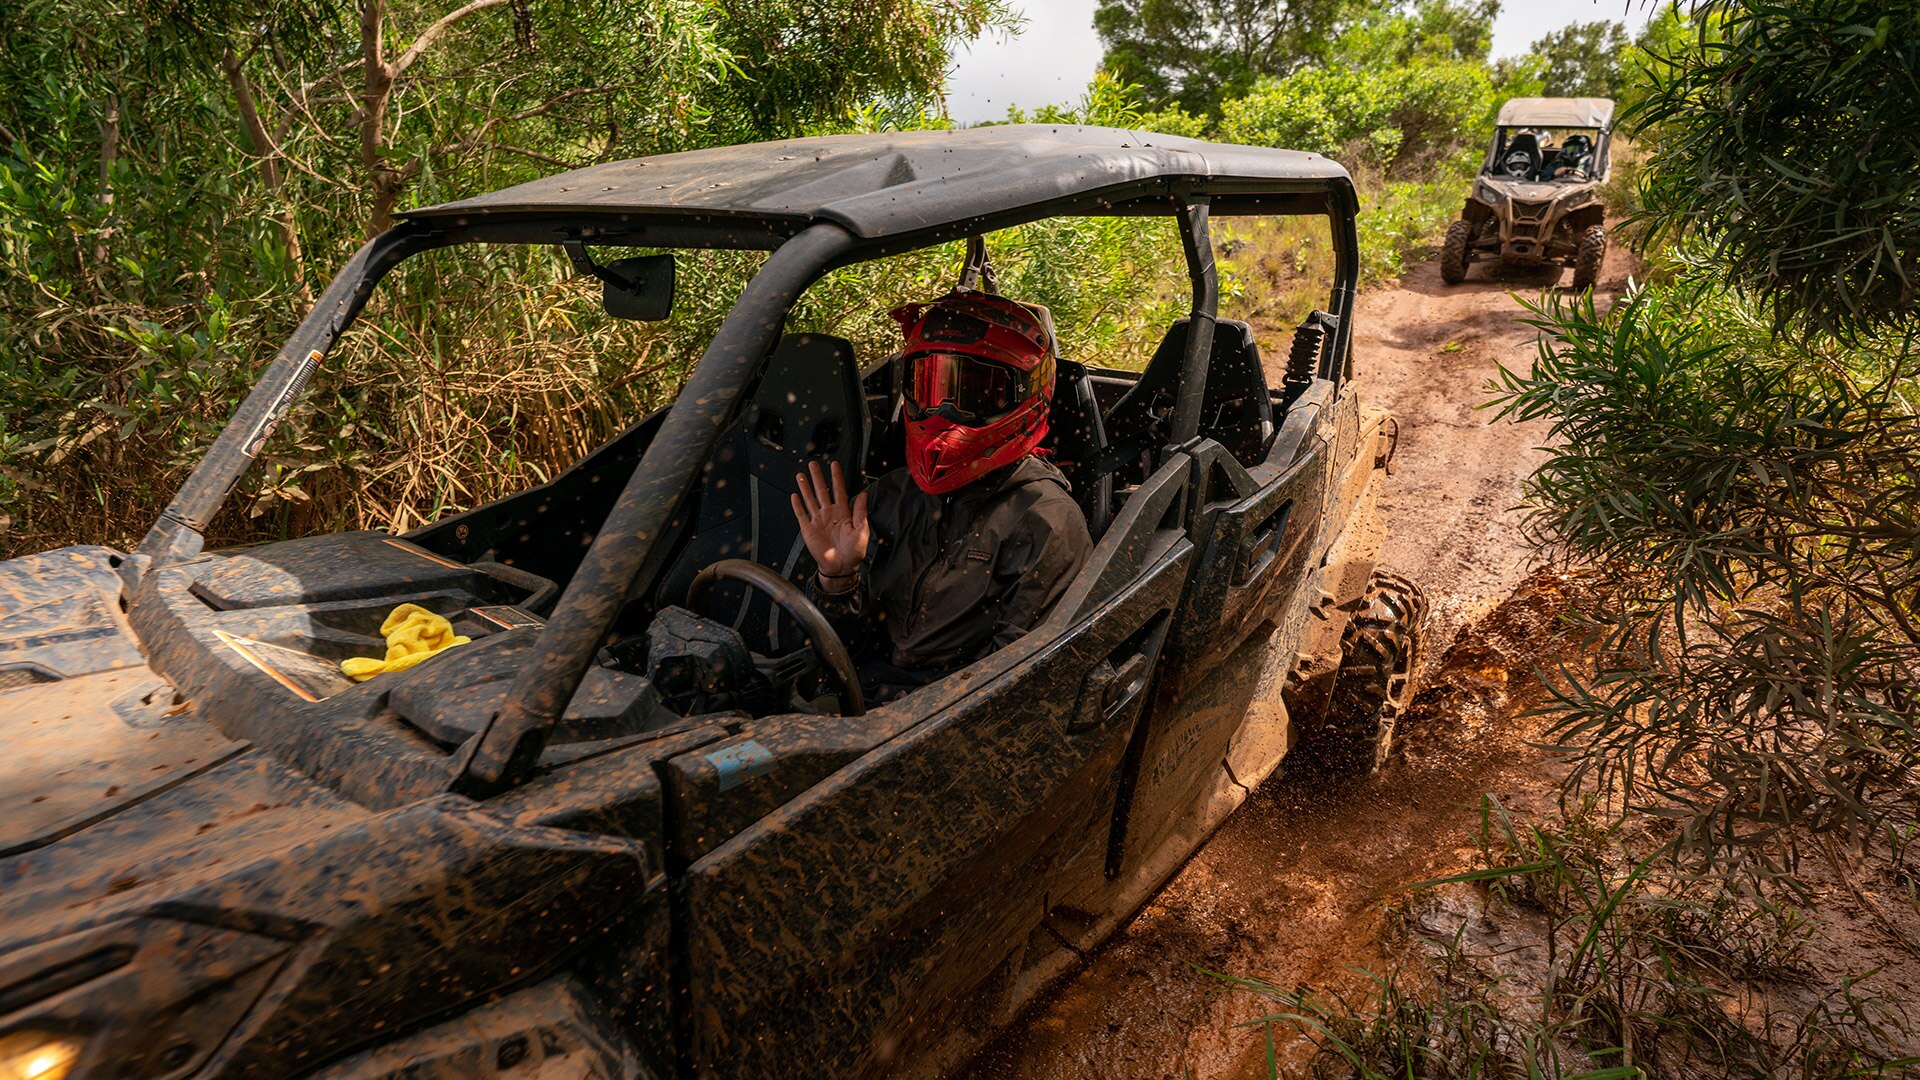 A rider waving inside a muddy vehicle